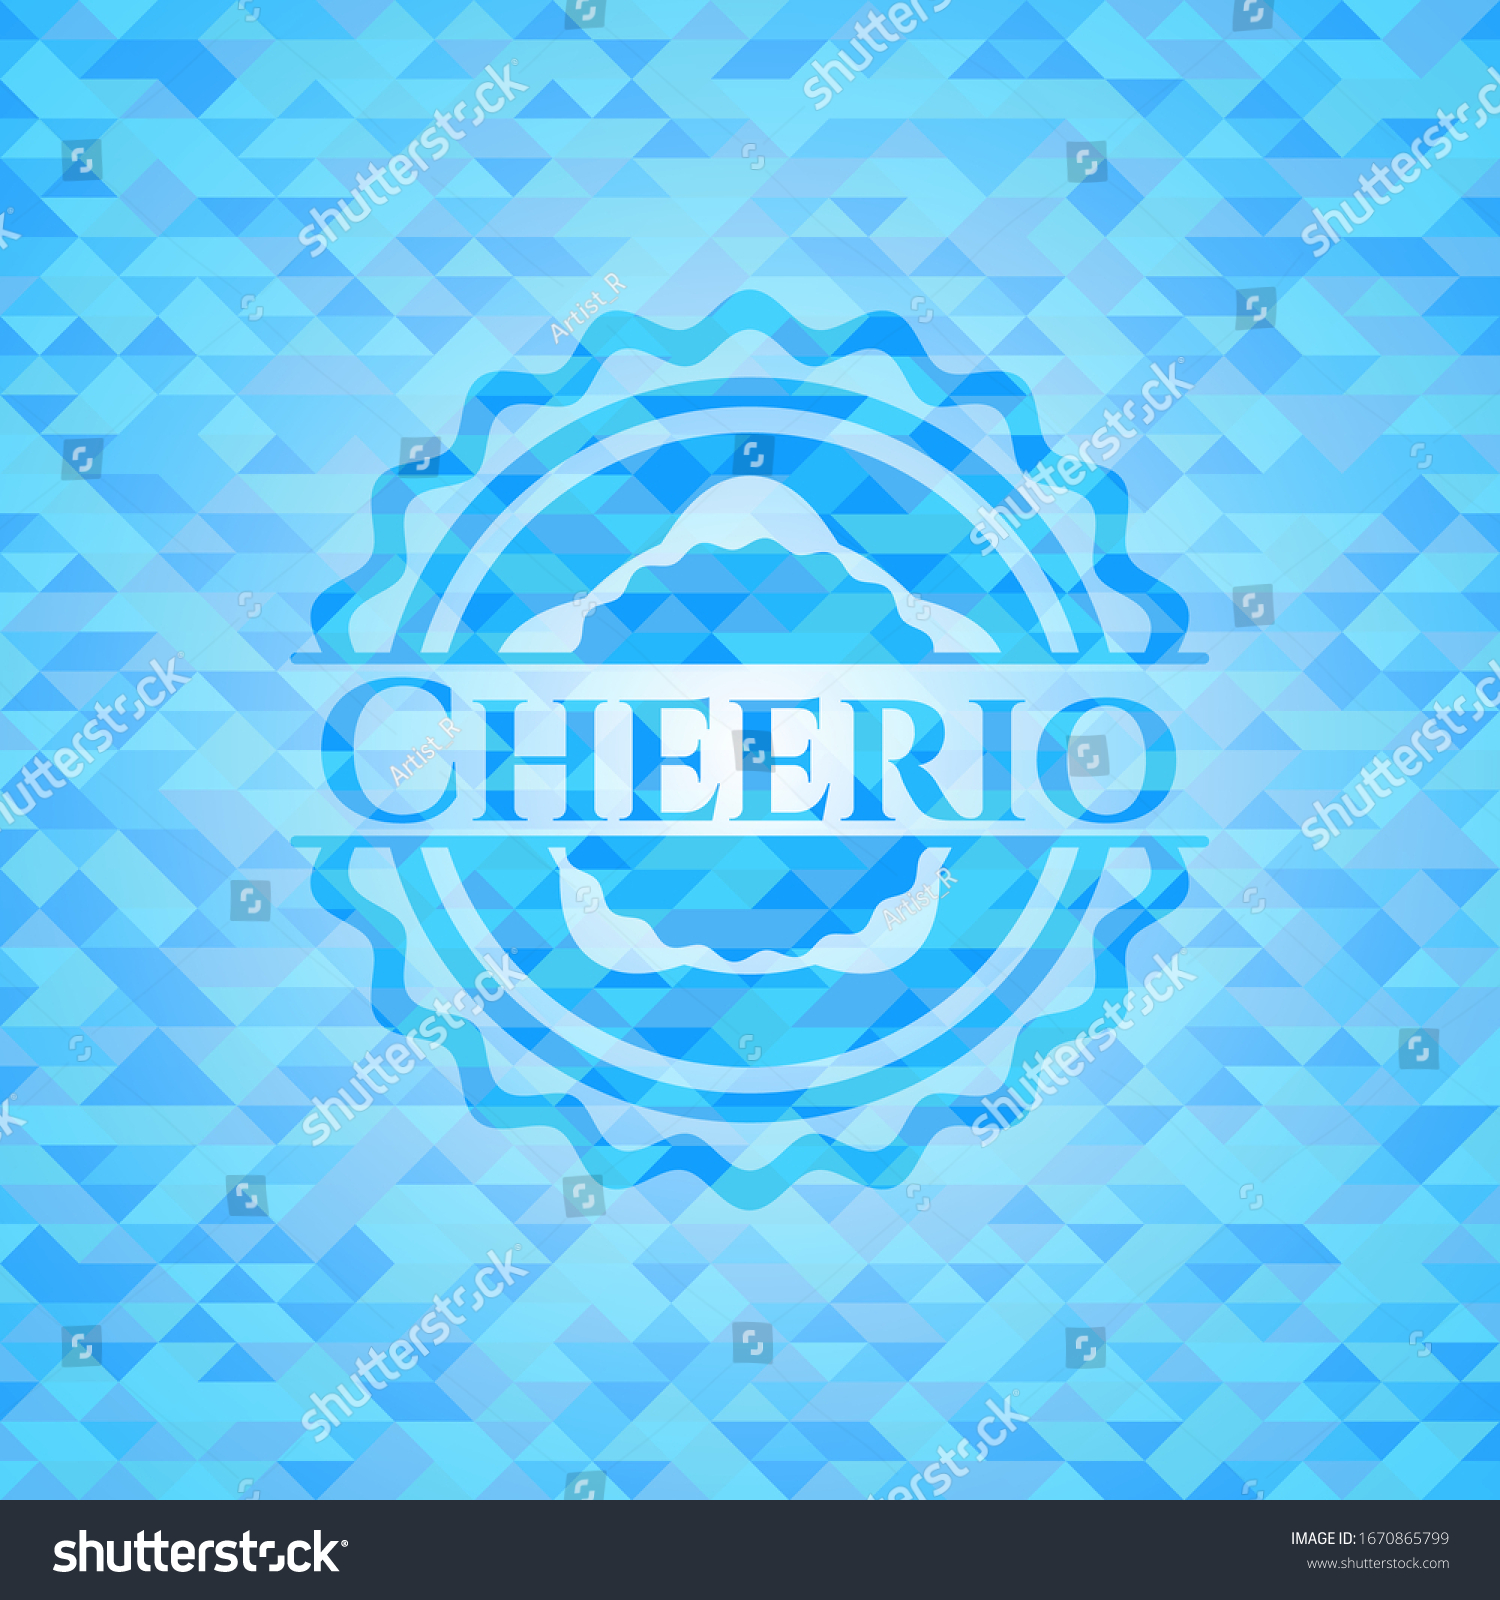 SVG of Cheerio realistic sky blue emblem. Mosaic background svg